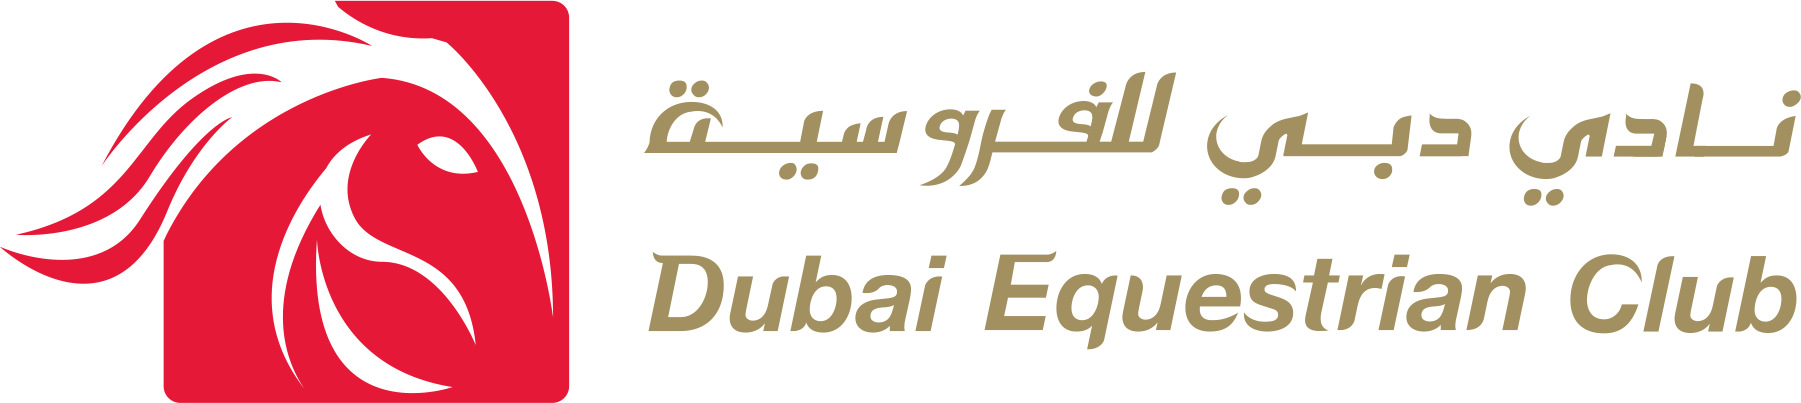 Dubai Equestrian Club